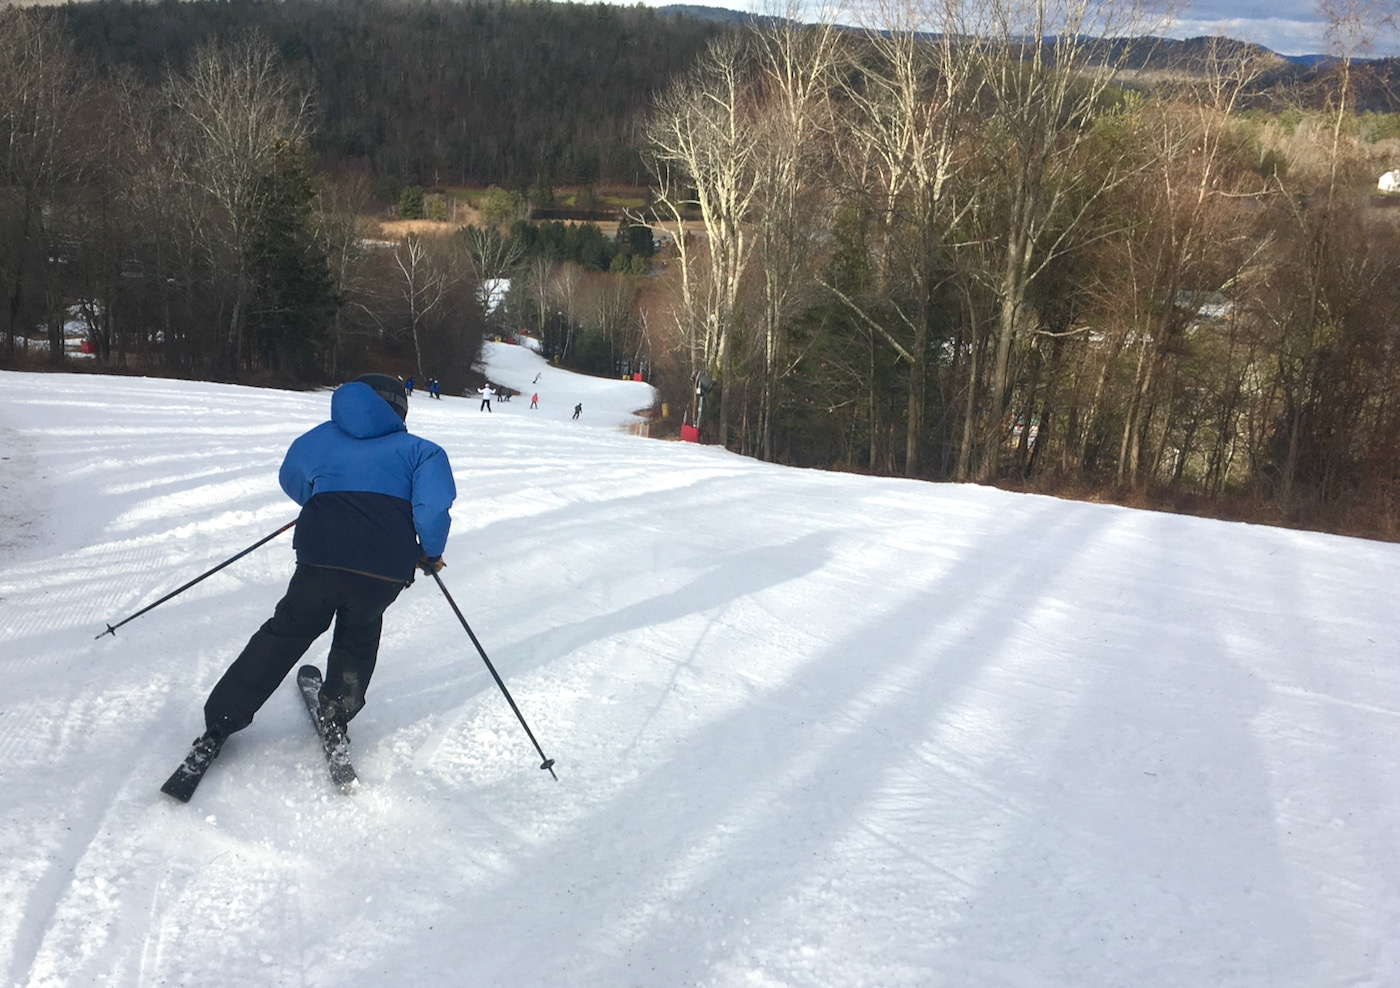 Mohawk Mountain skier